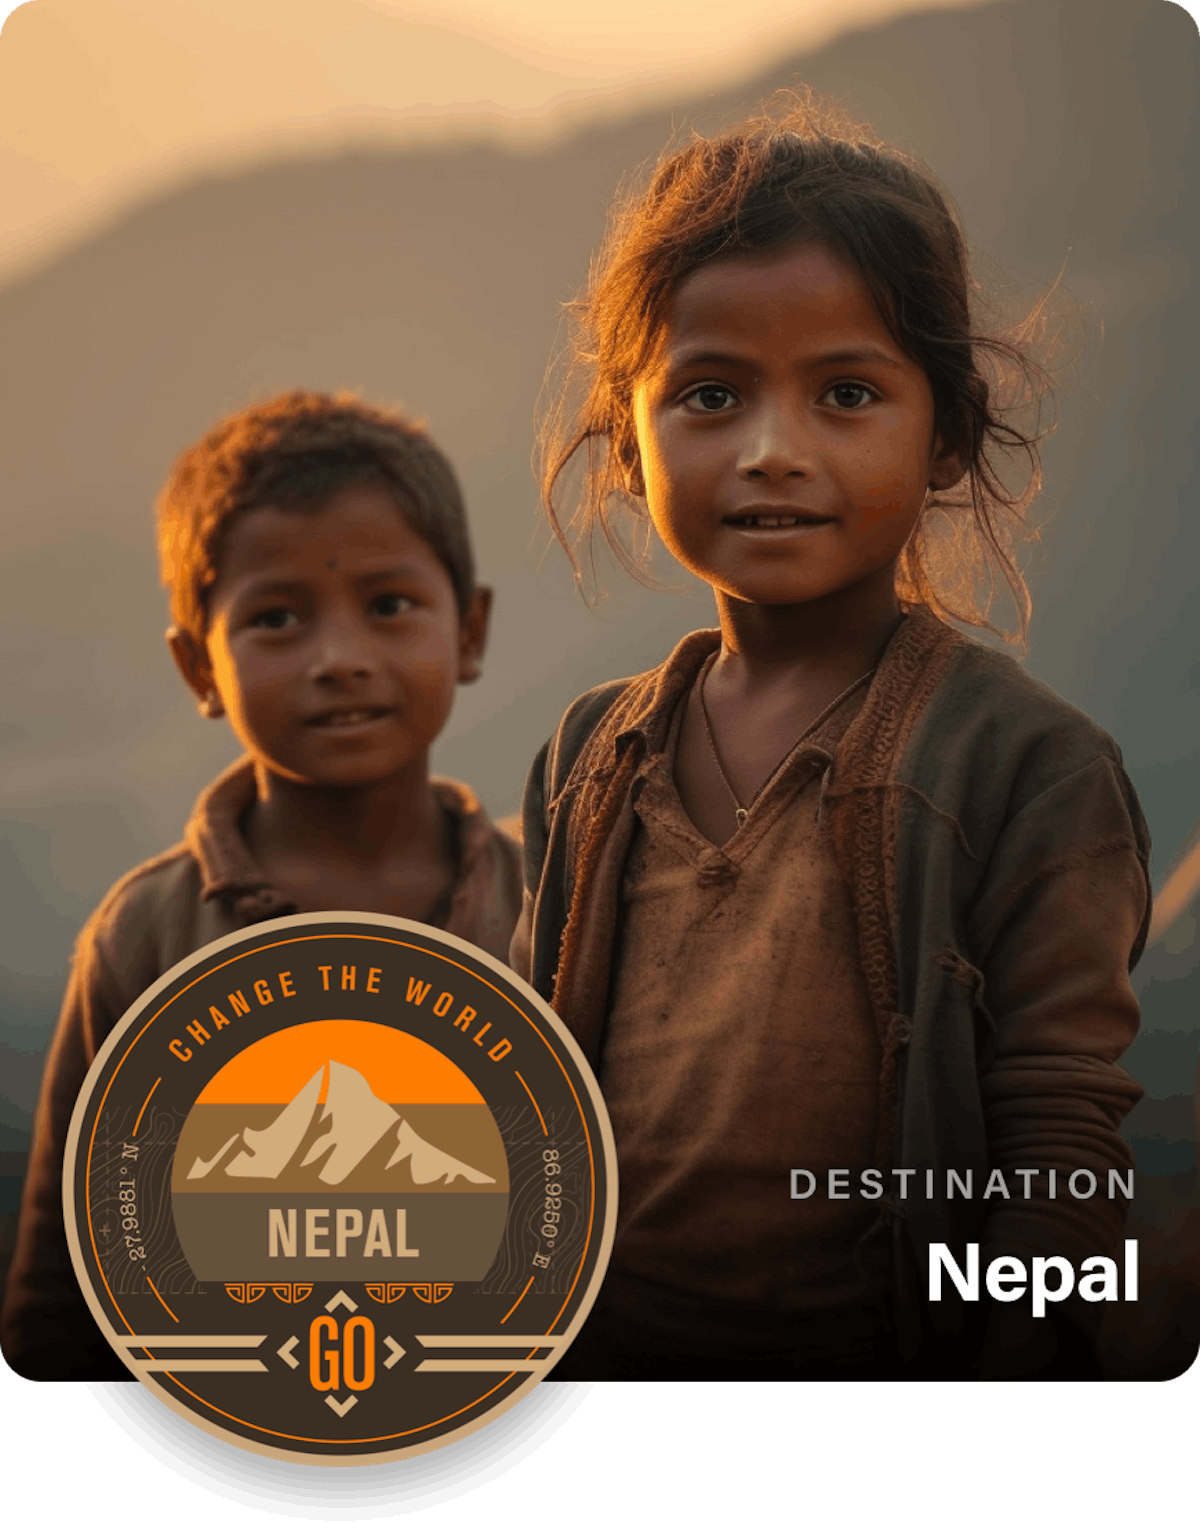 image of nepal destination card